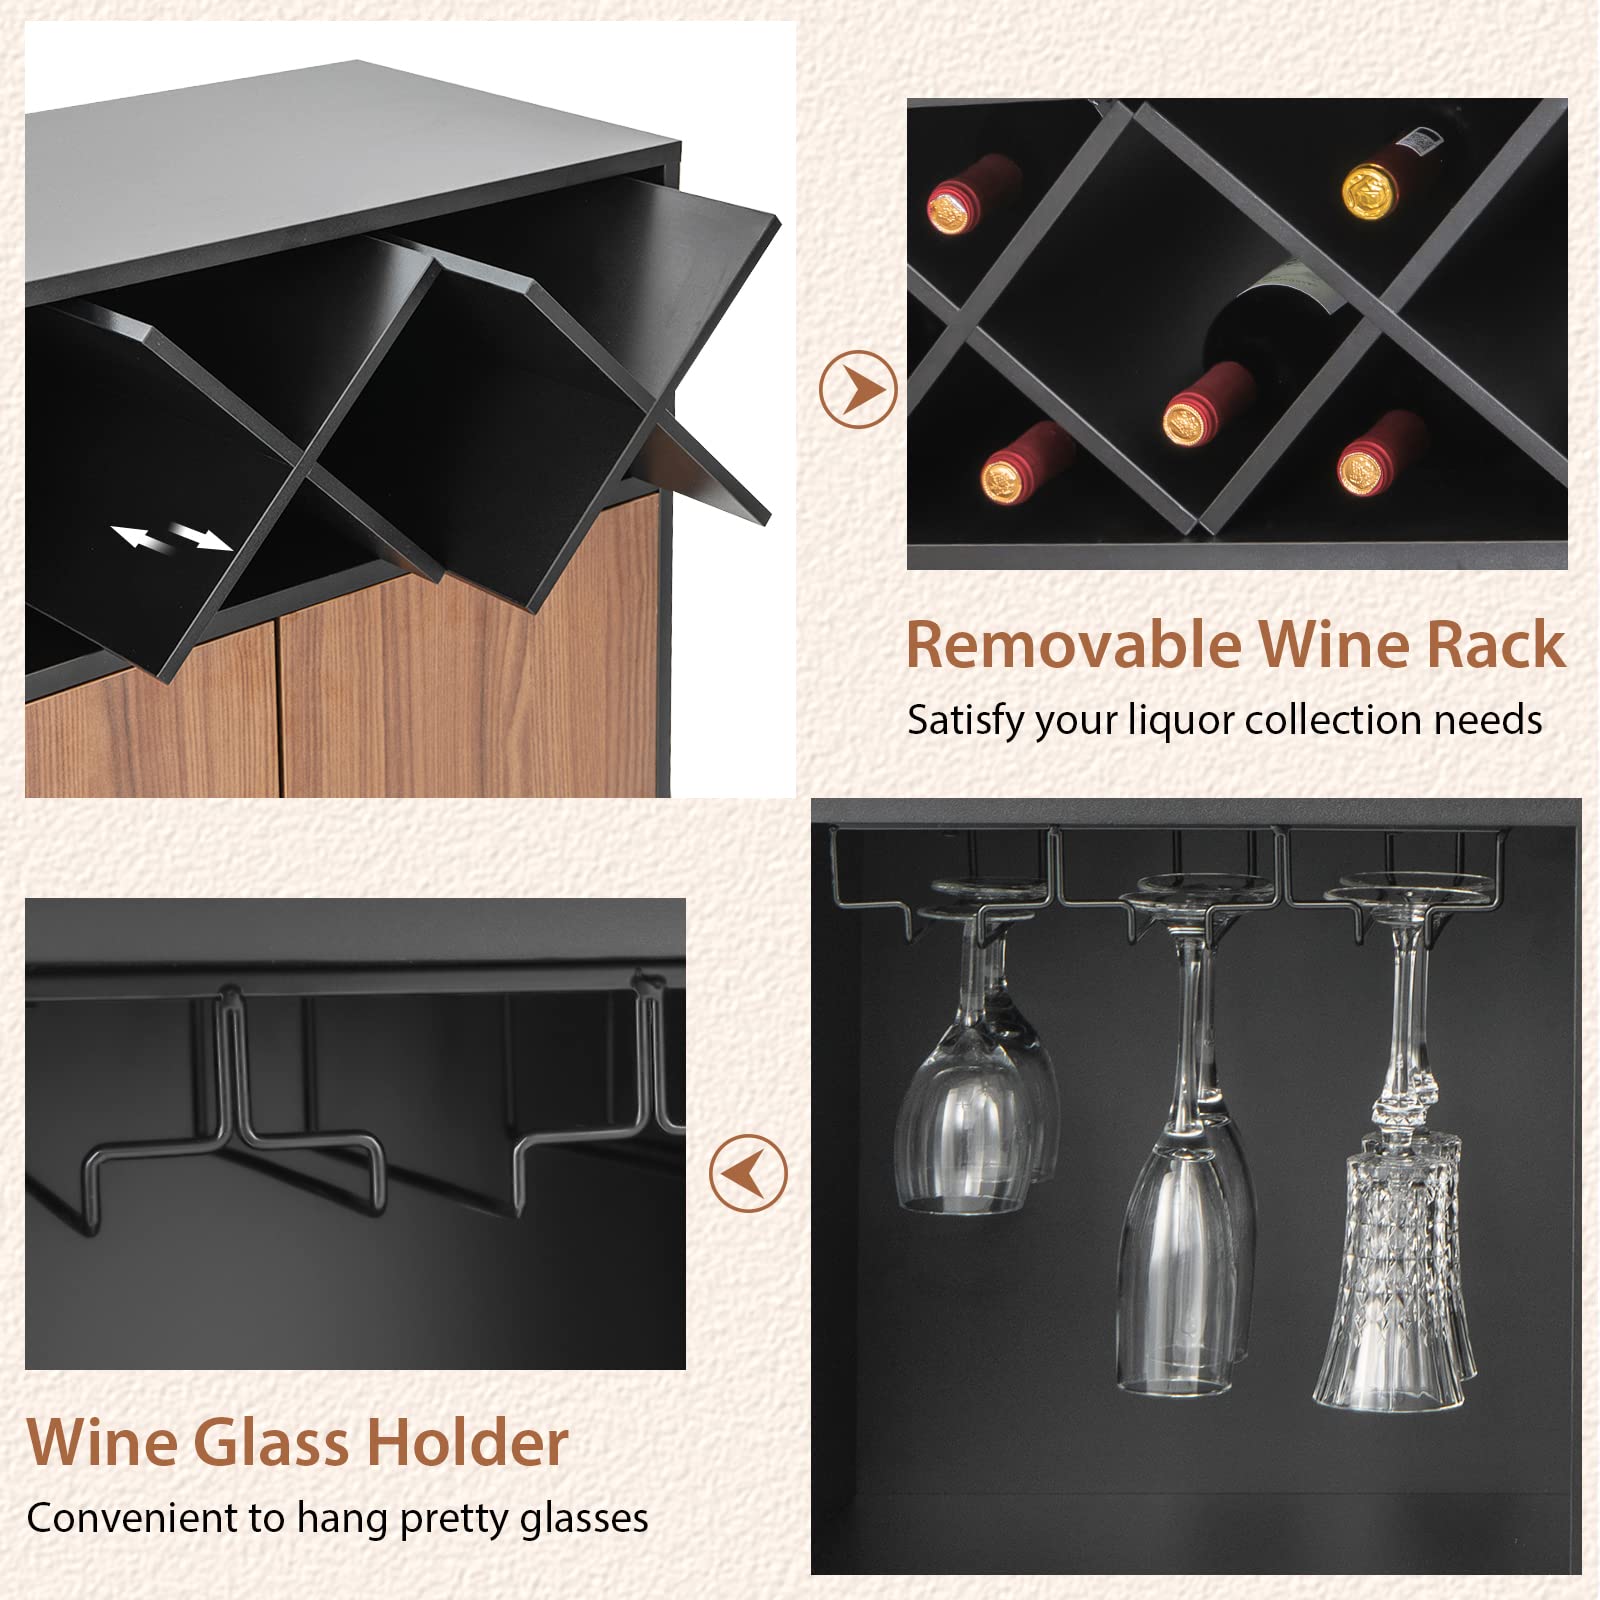 Giantex Buffet Sideboard, Wine Bar Base Cabinet 45”X15”x32”